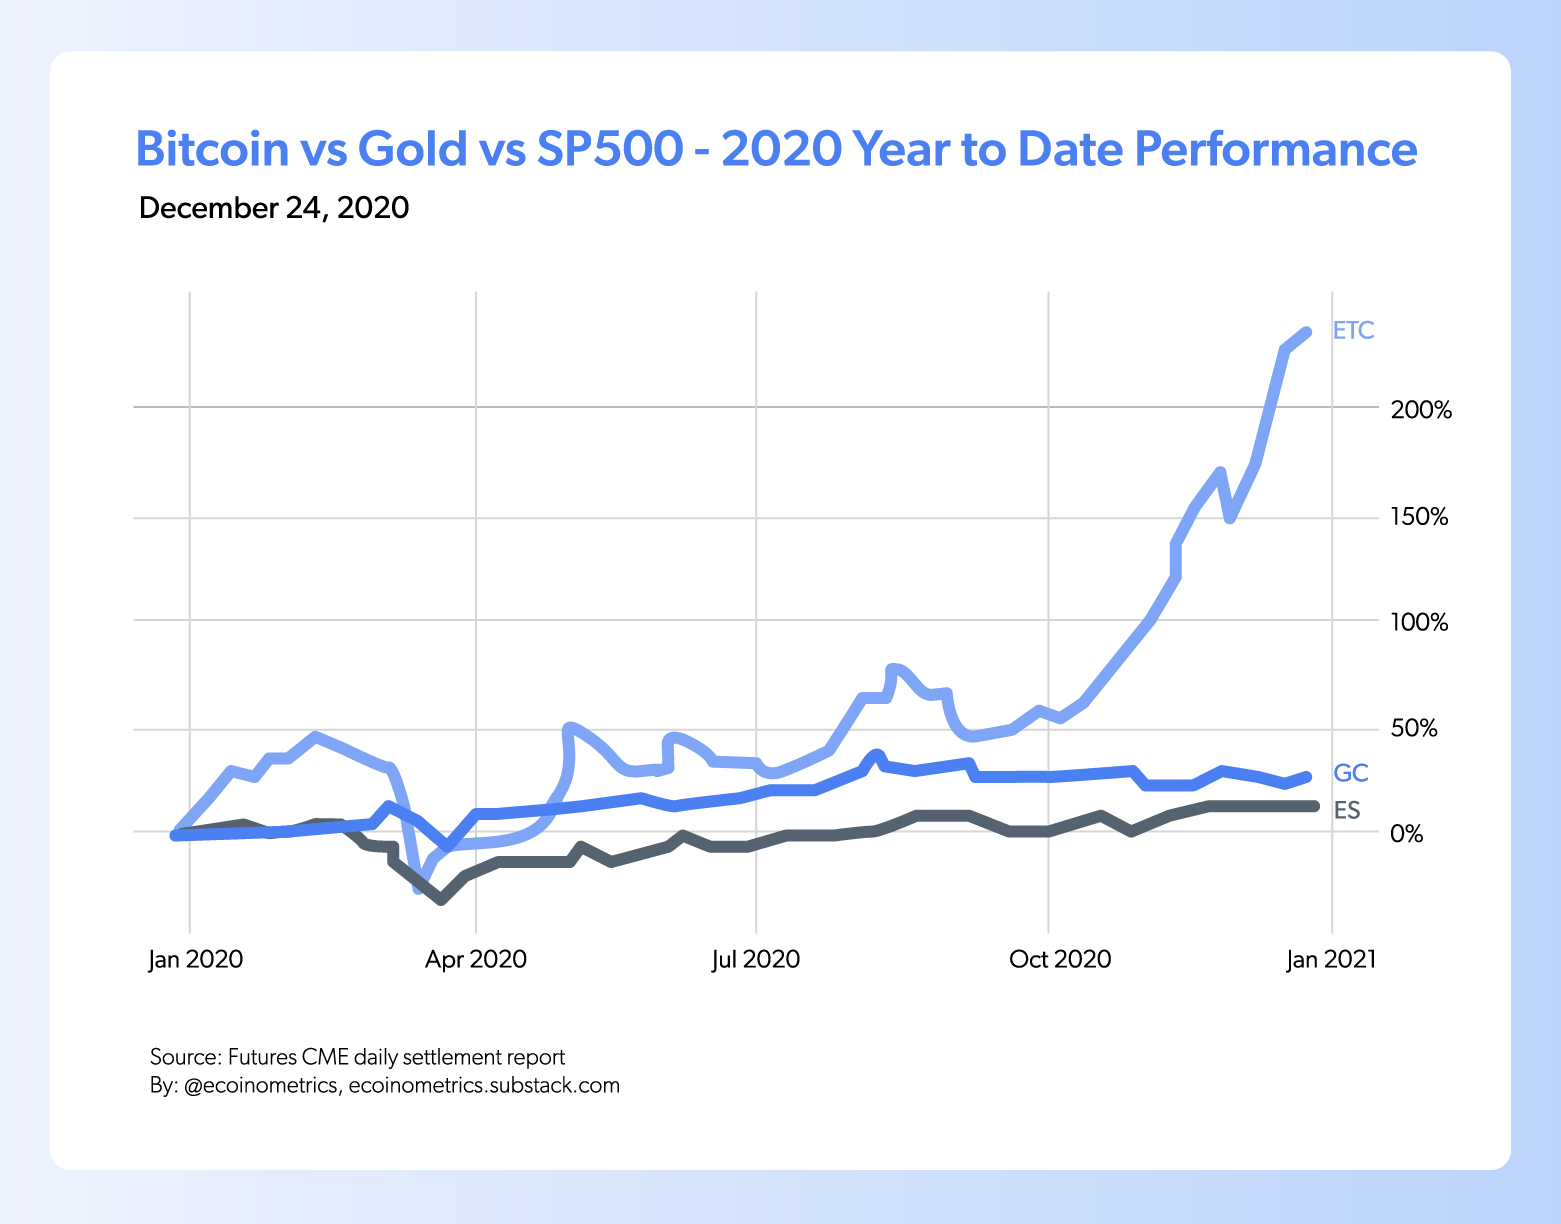 Bitcoin VS Gold VS SP500 between January 2020 and January 2021